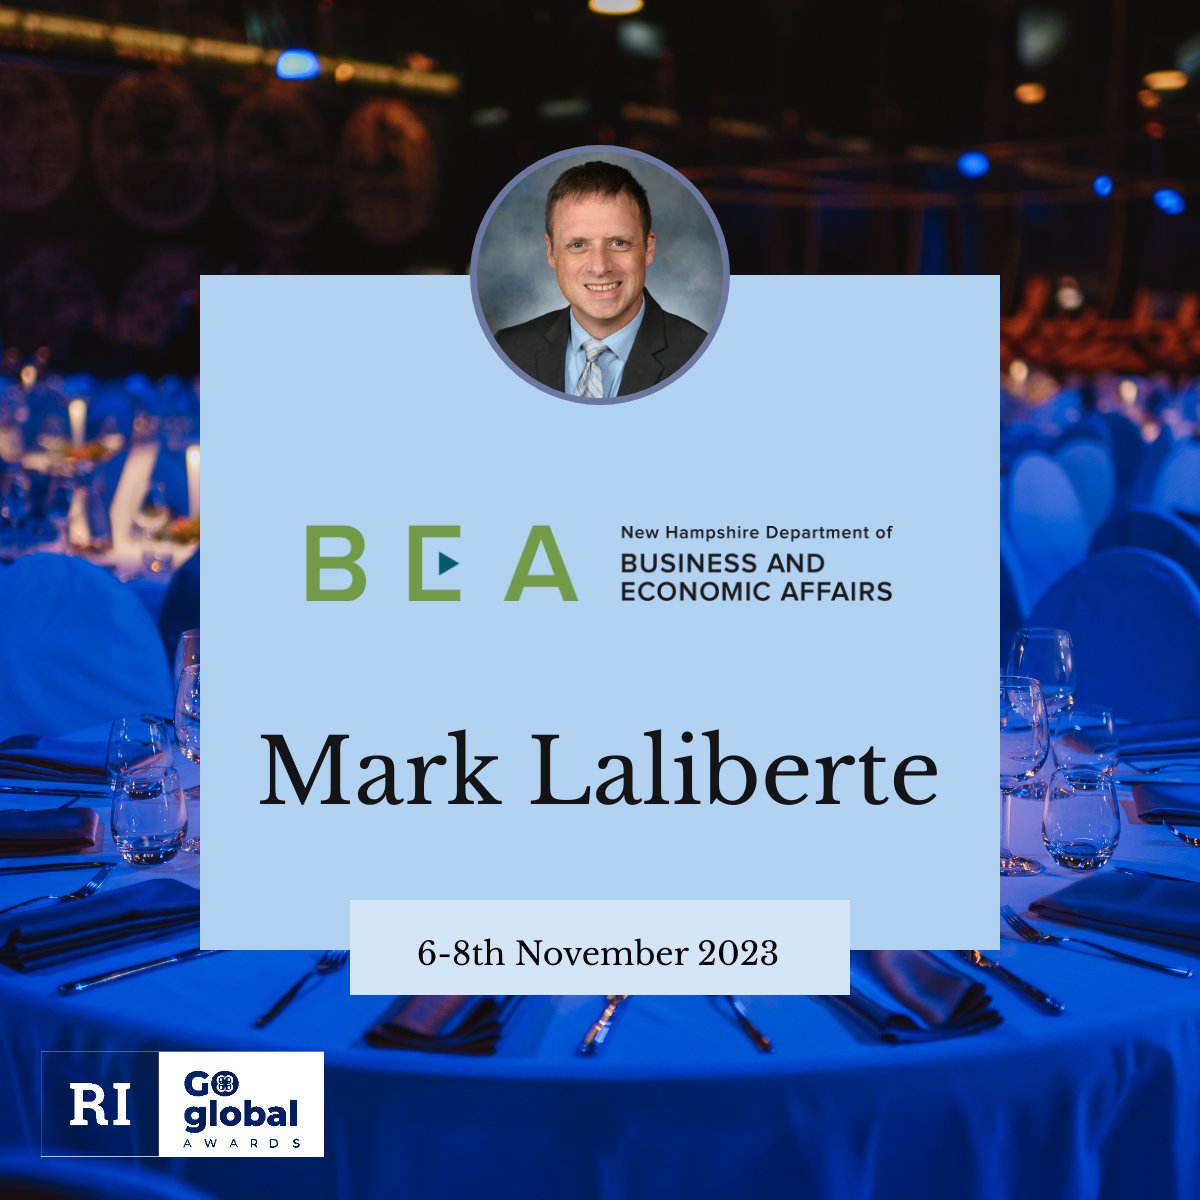 Welcome to Mark Laliberte from New Hampshire Department of Business & Economic Affairs.

Join us at the 2023 Go Global Awards!

#GoGlobalAwards #RhodeIslandCommerce #ITC #ICTTM
@MarkLaliberte @NHEconomy